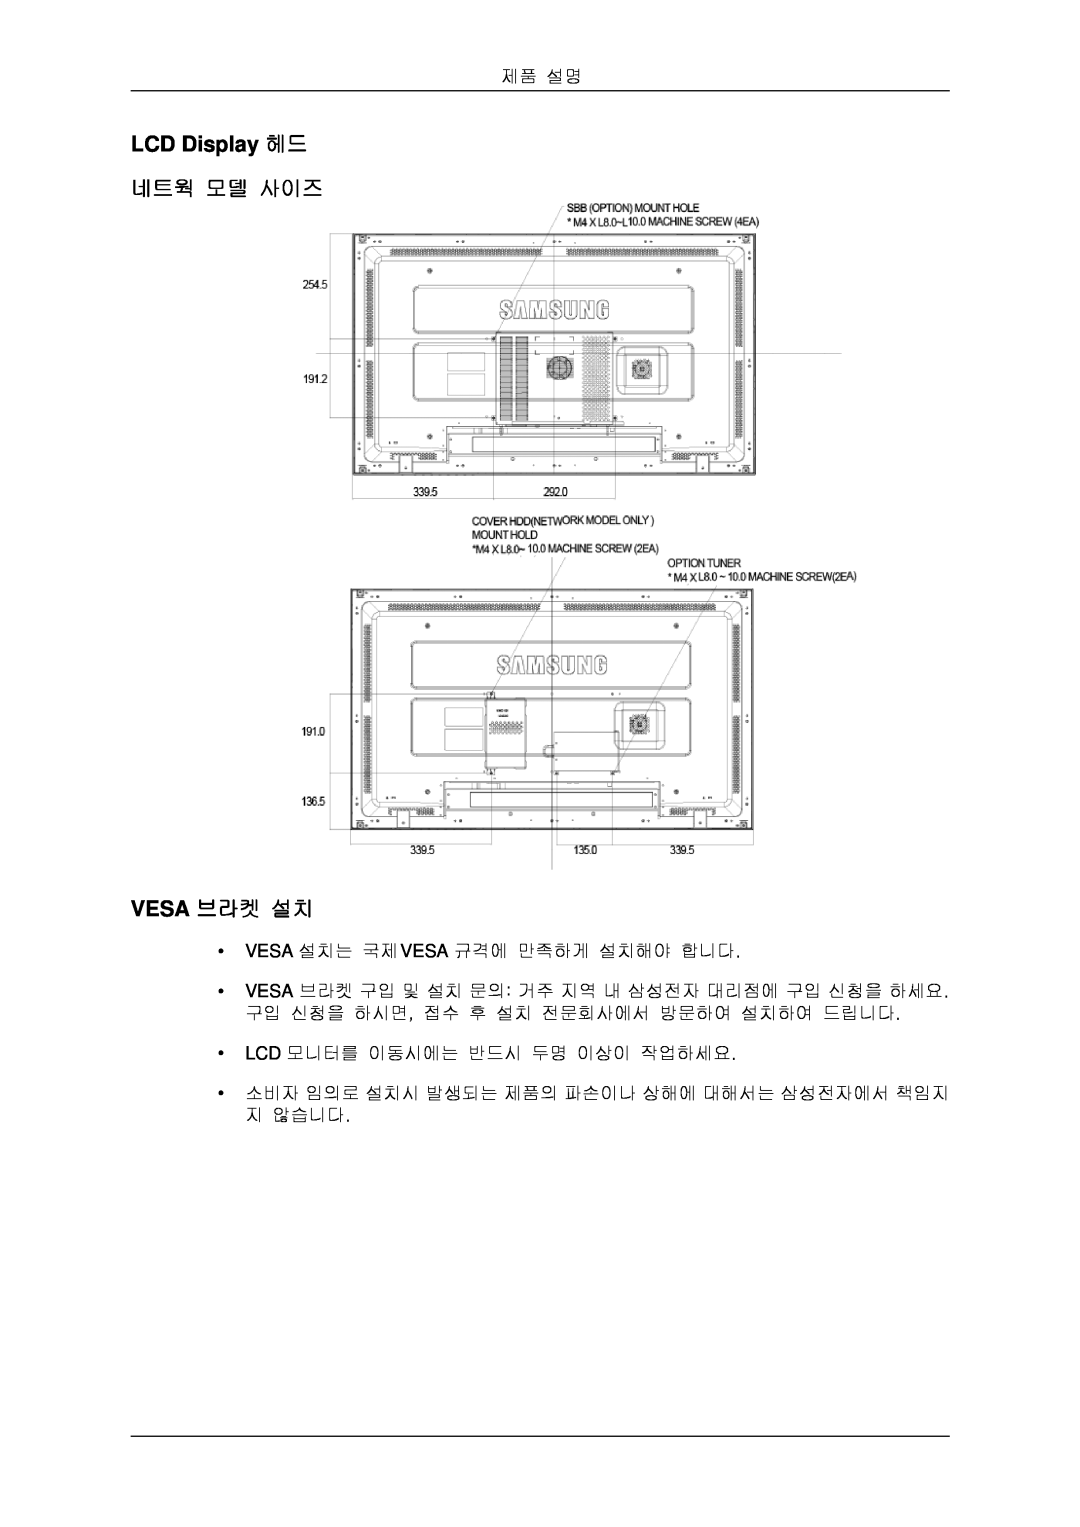 Samsung BN59-00806D-00 quick start LCD Display 헤드 네트웍 모델 사이즈 VESA 브라켓 설치, 제품 설명, Vesa 설치는 국제vesa 규격에 만족하게 설치해야 합니다 